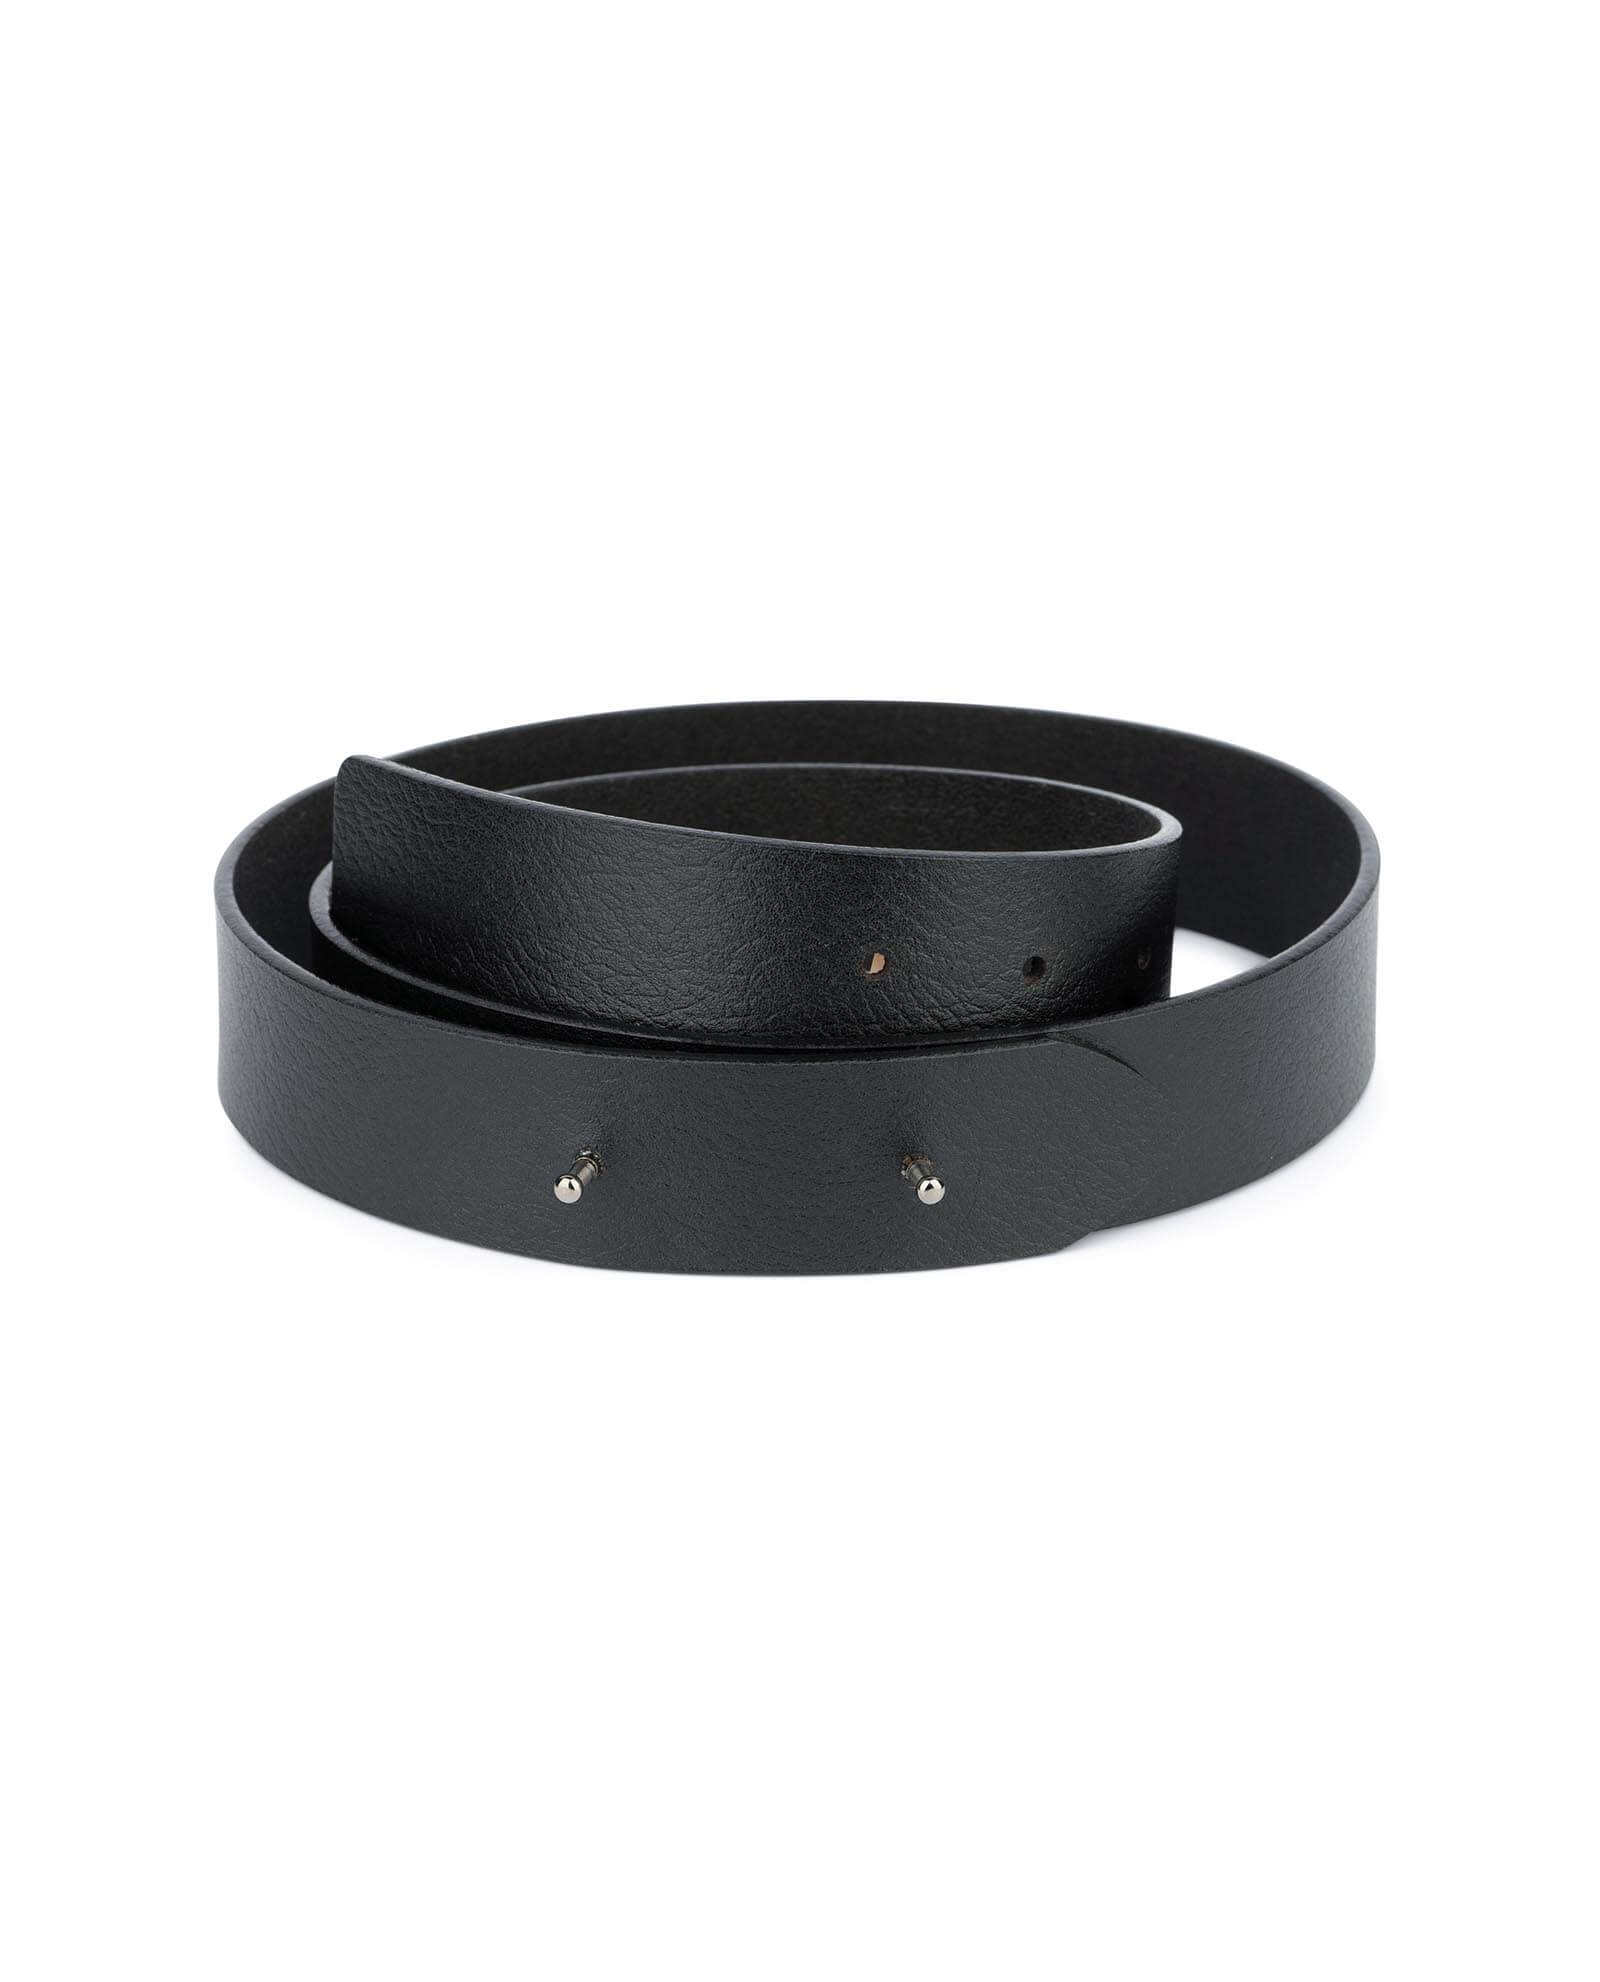 Buy Men's Black Leather Belt Without Buckle | LeatherBeltsOnline.com